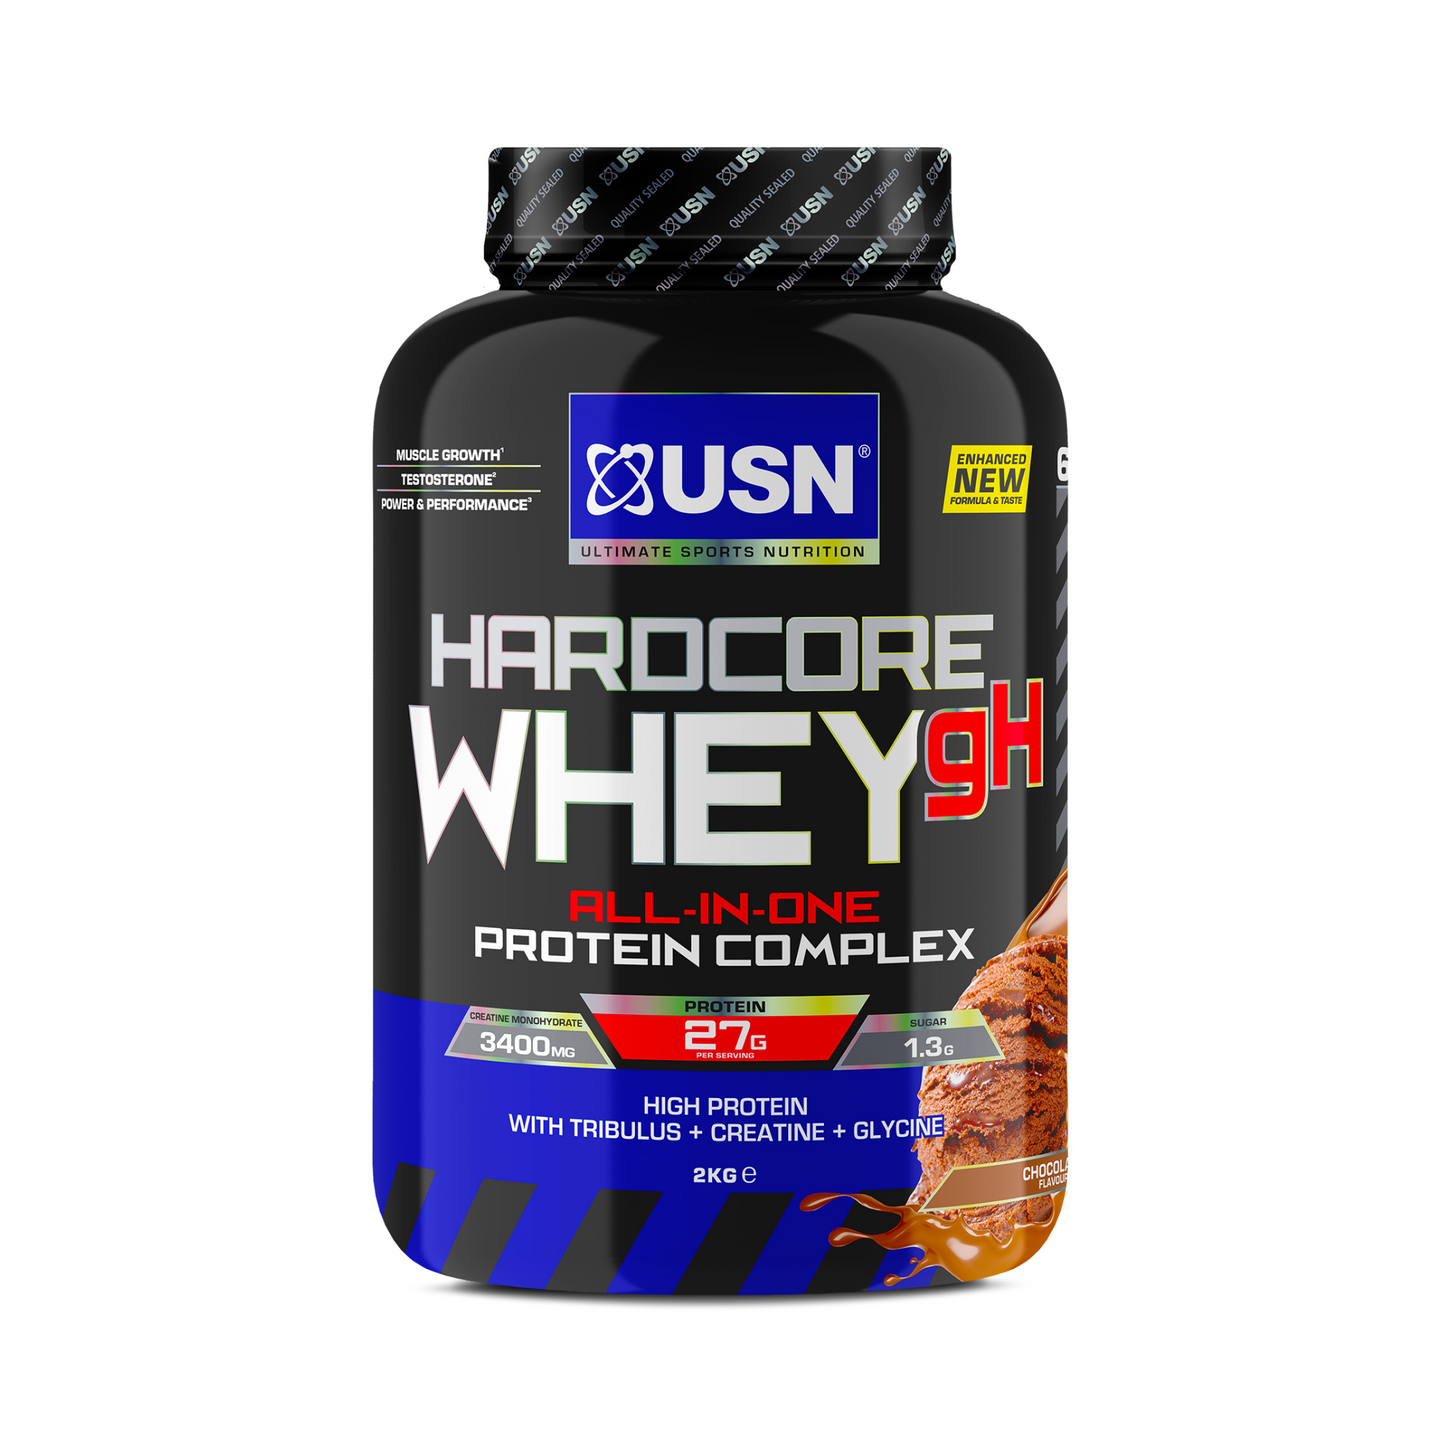 Hardcore Whey gH - Protein